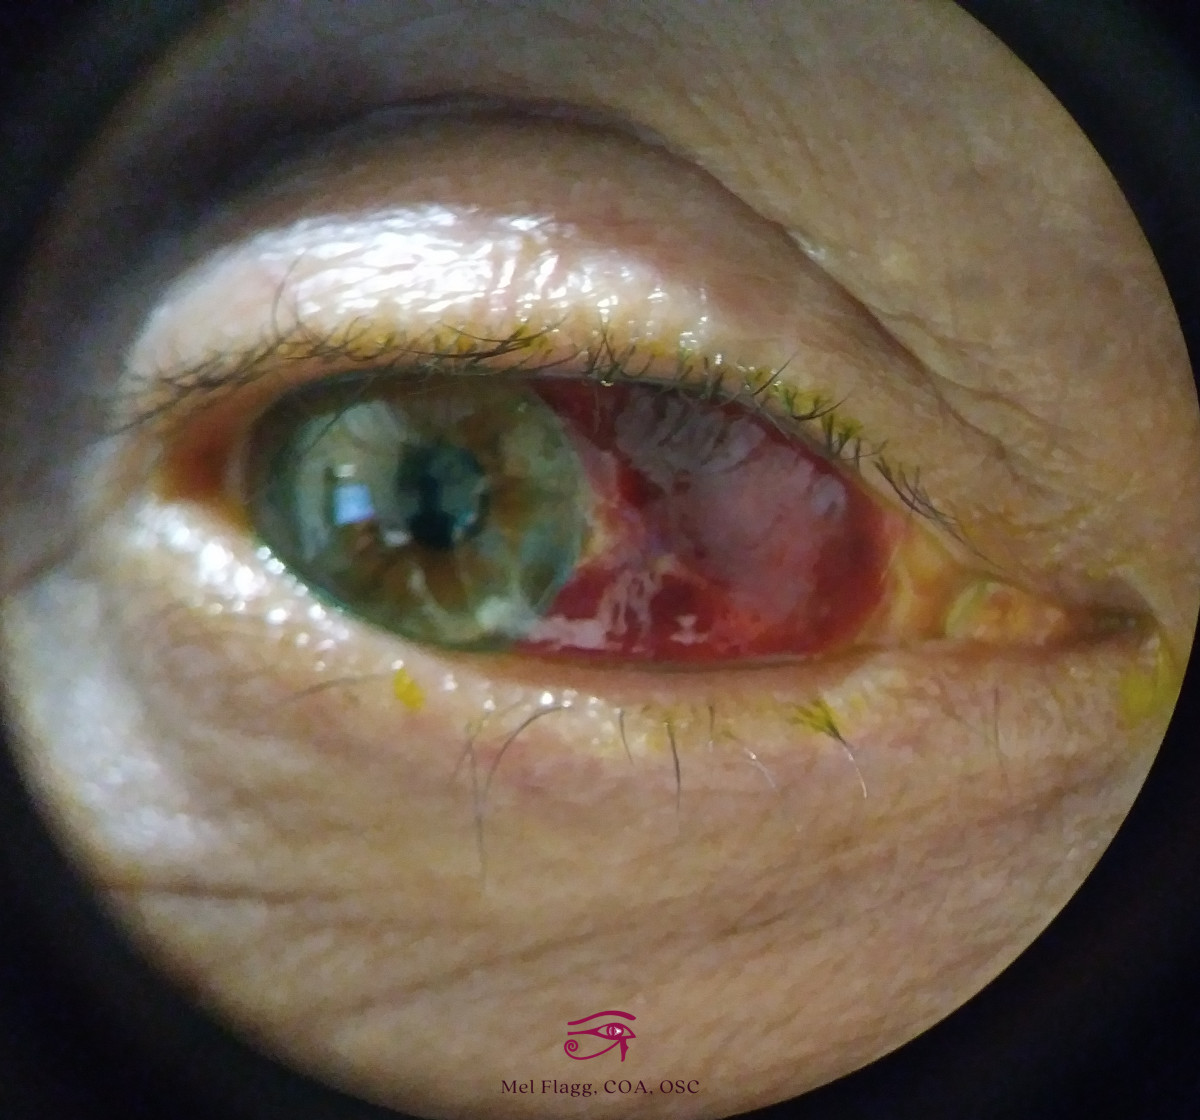 Subconjunctival Hemorrhage: Broken Blood Vessel in the Eye